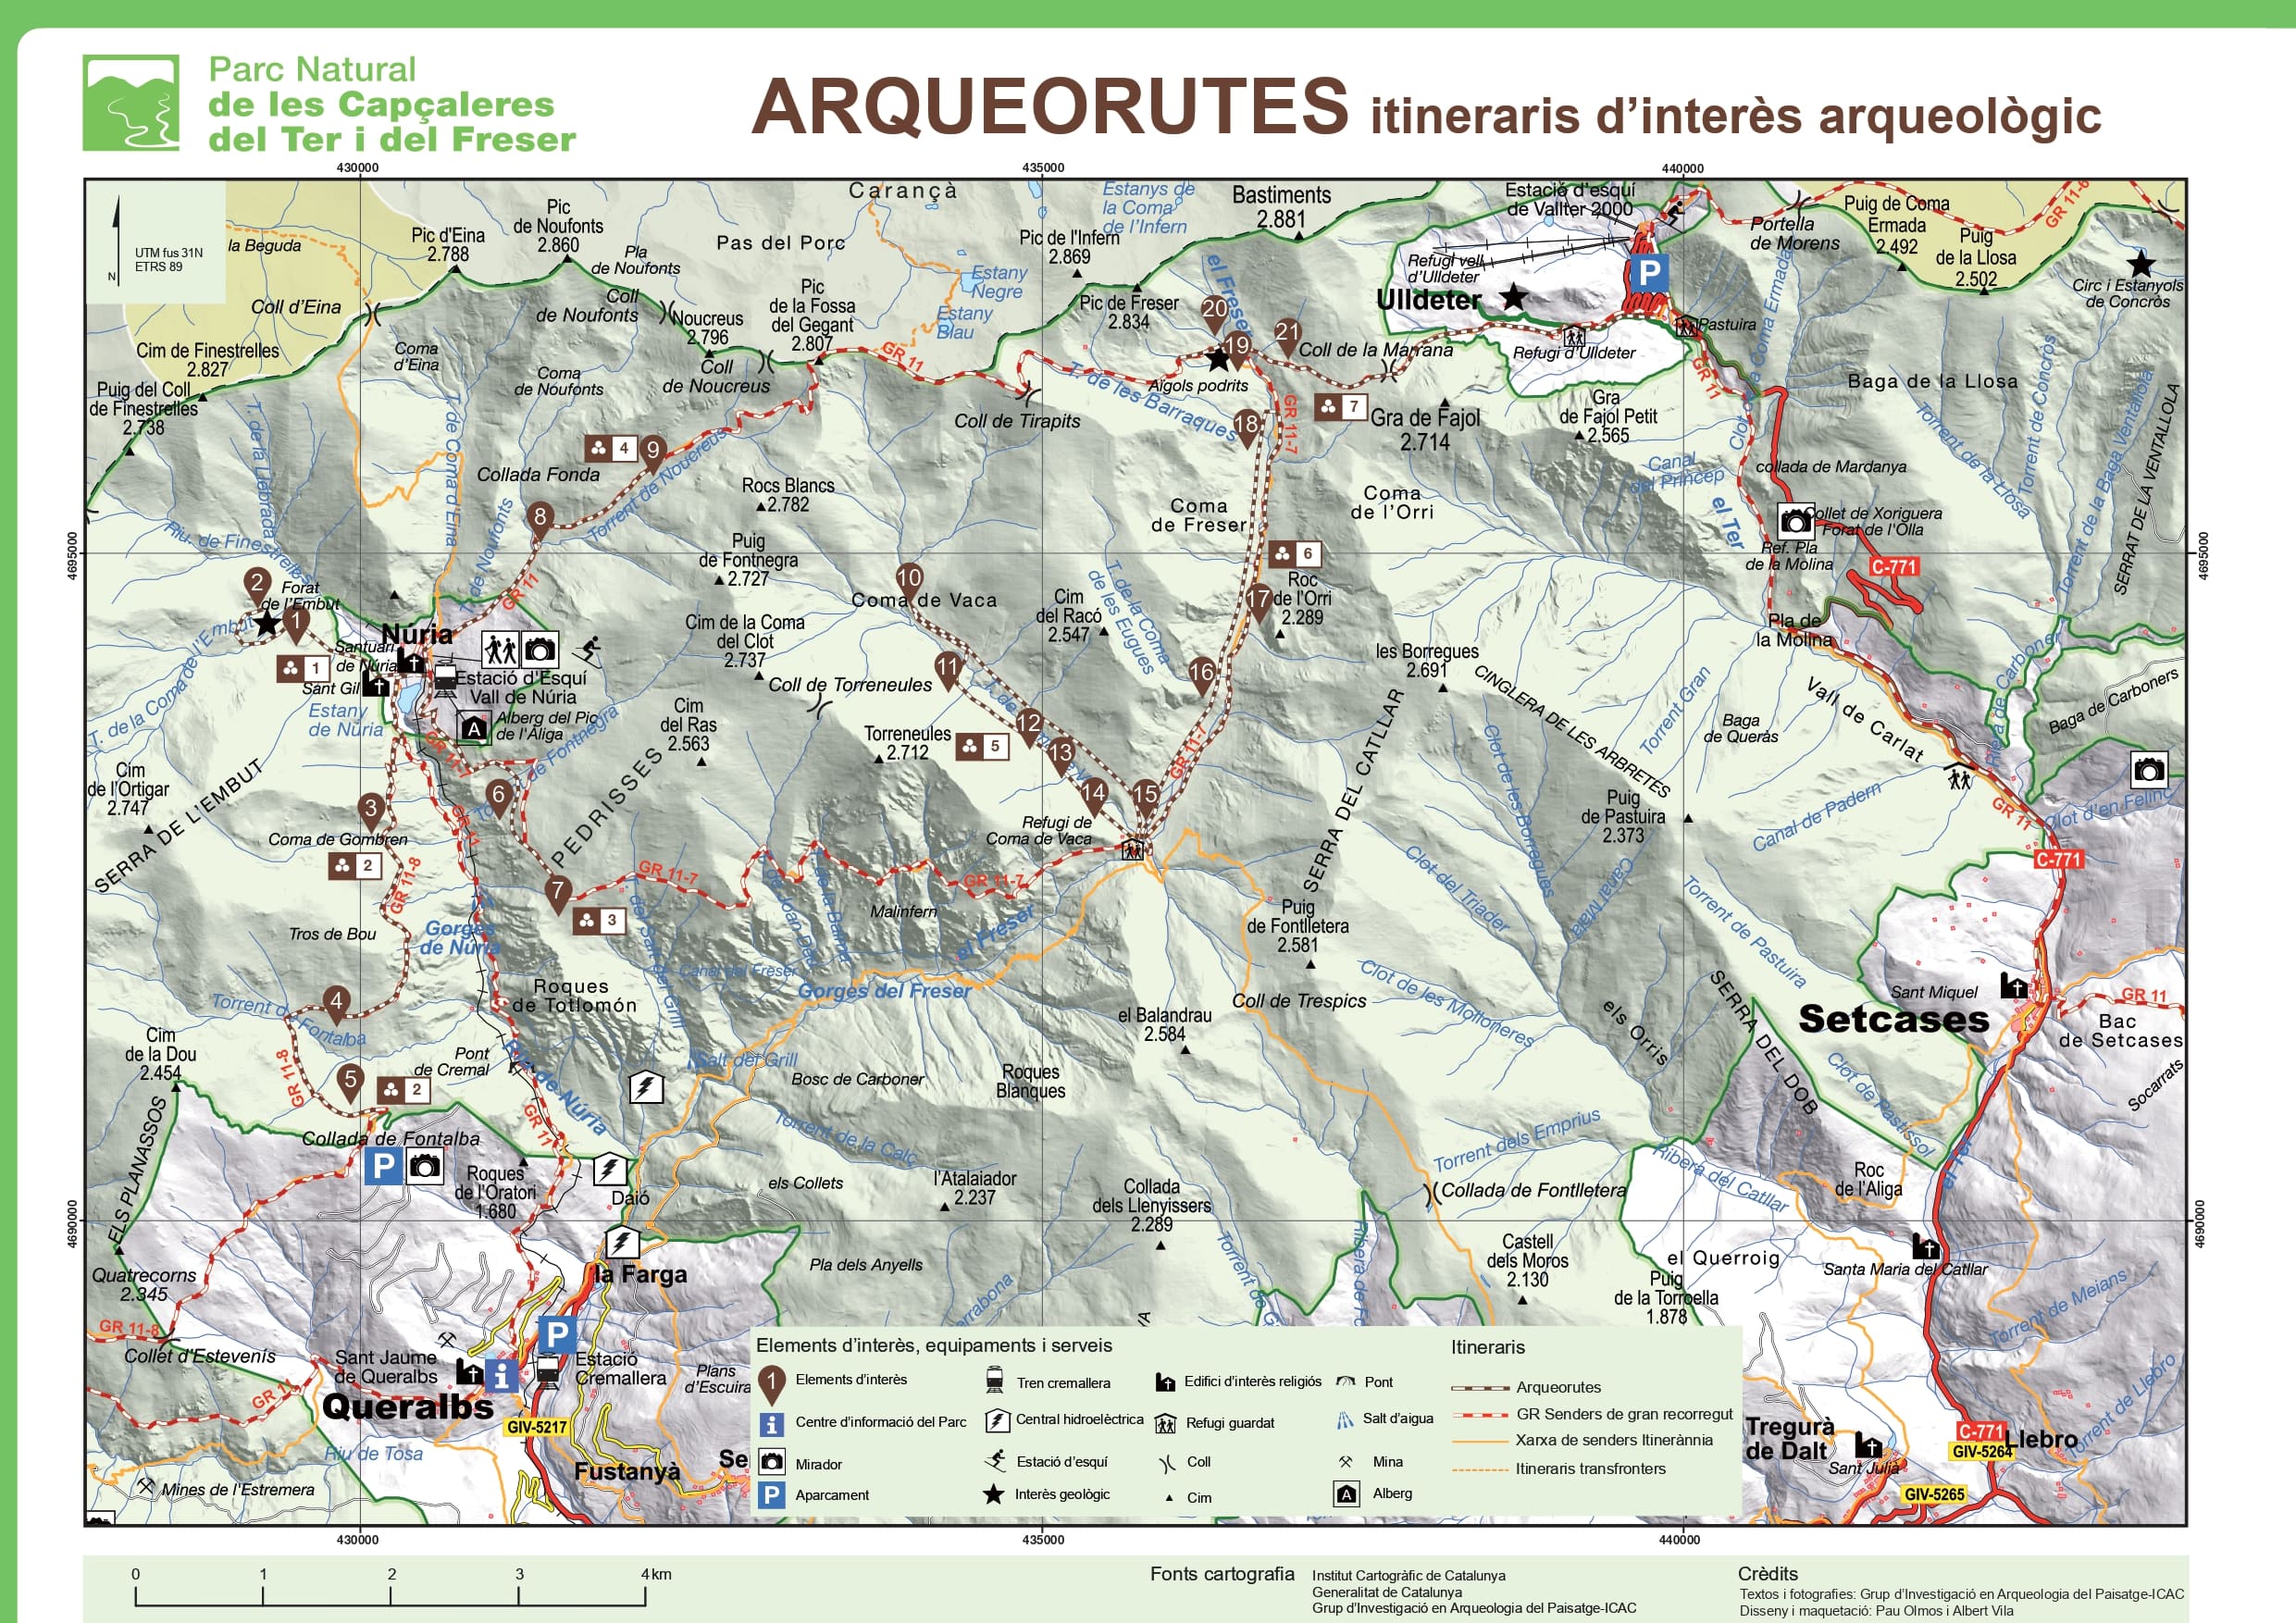 Mapa-Arqueorutes_GIAP-min